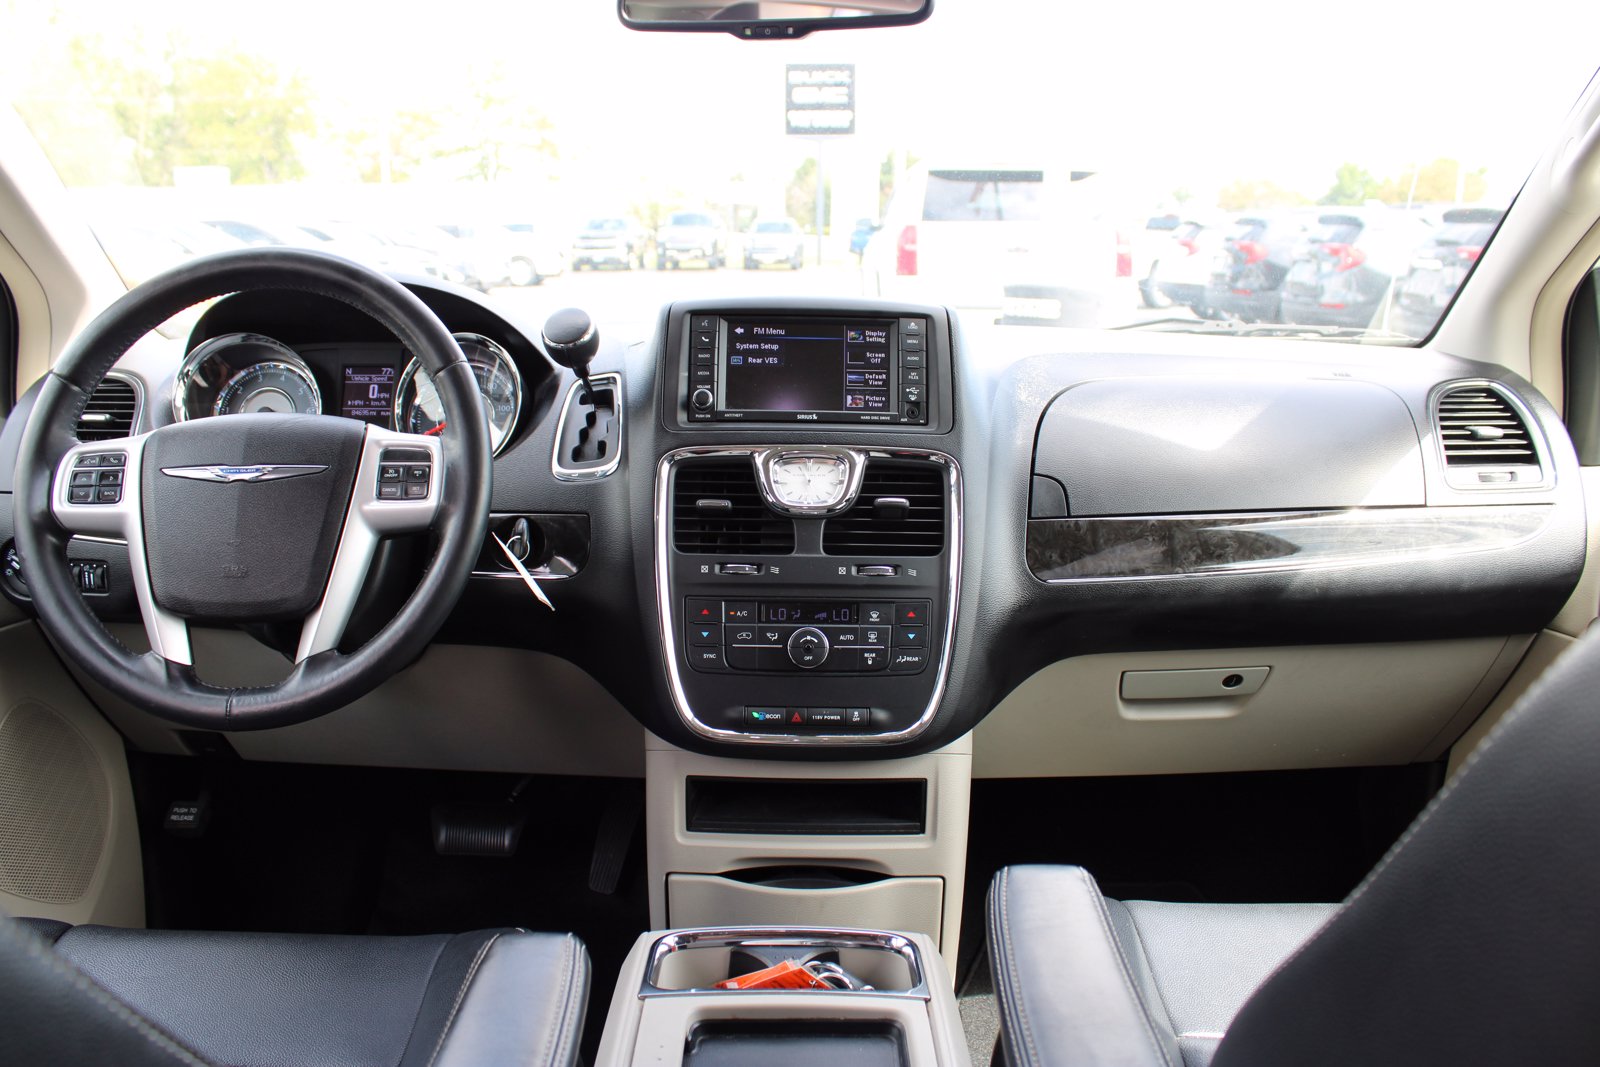 PreOwned 2014 Chrysler Town & Country Touring Minivan